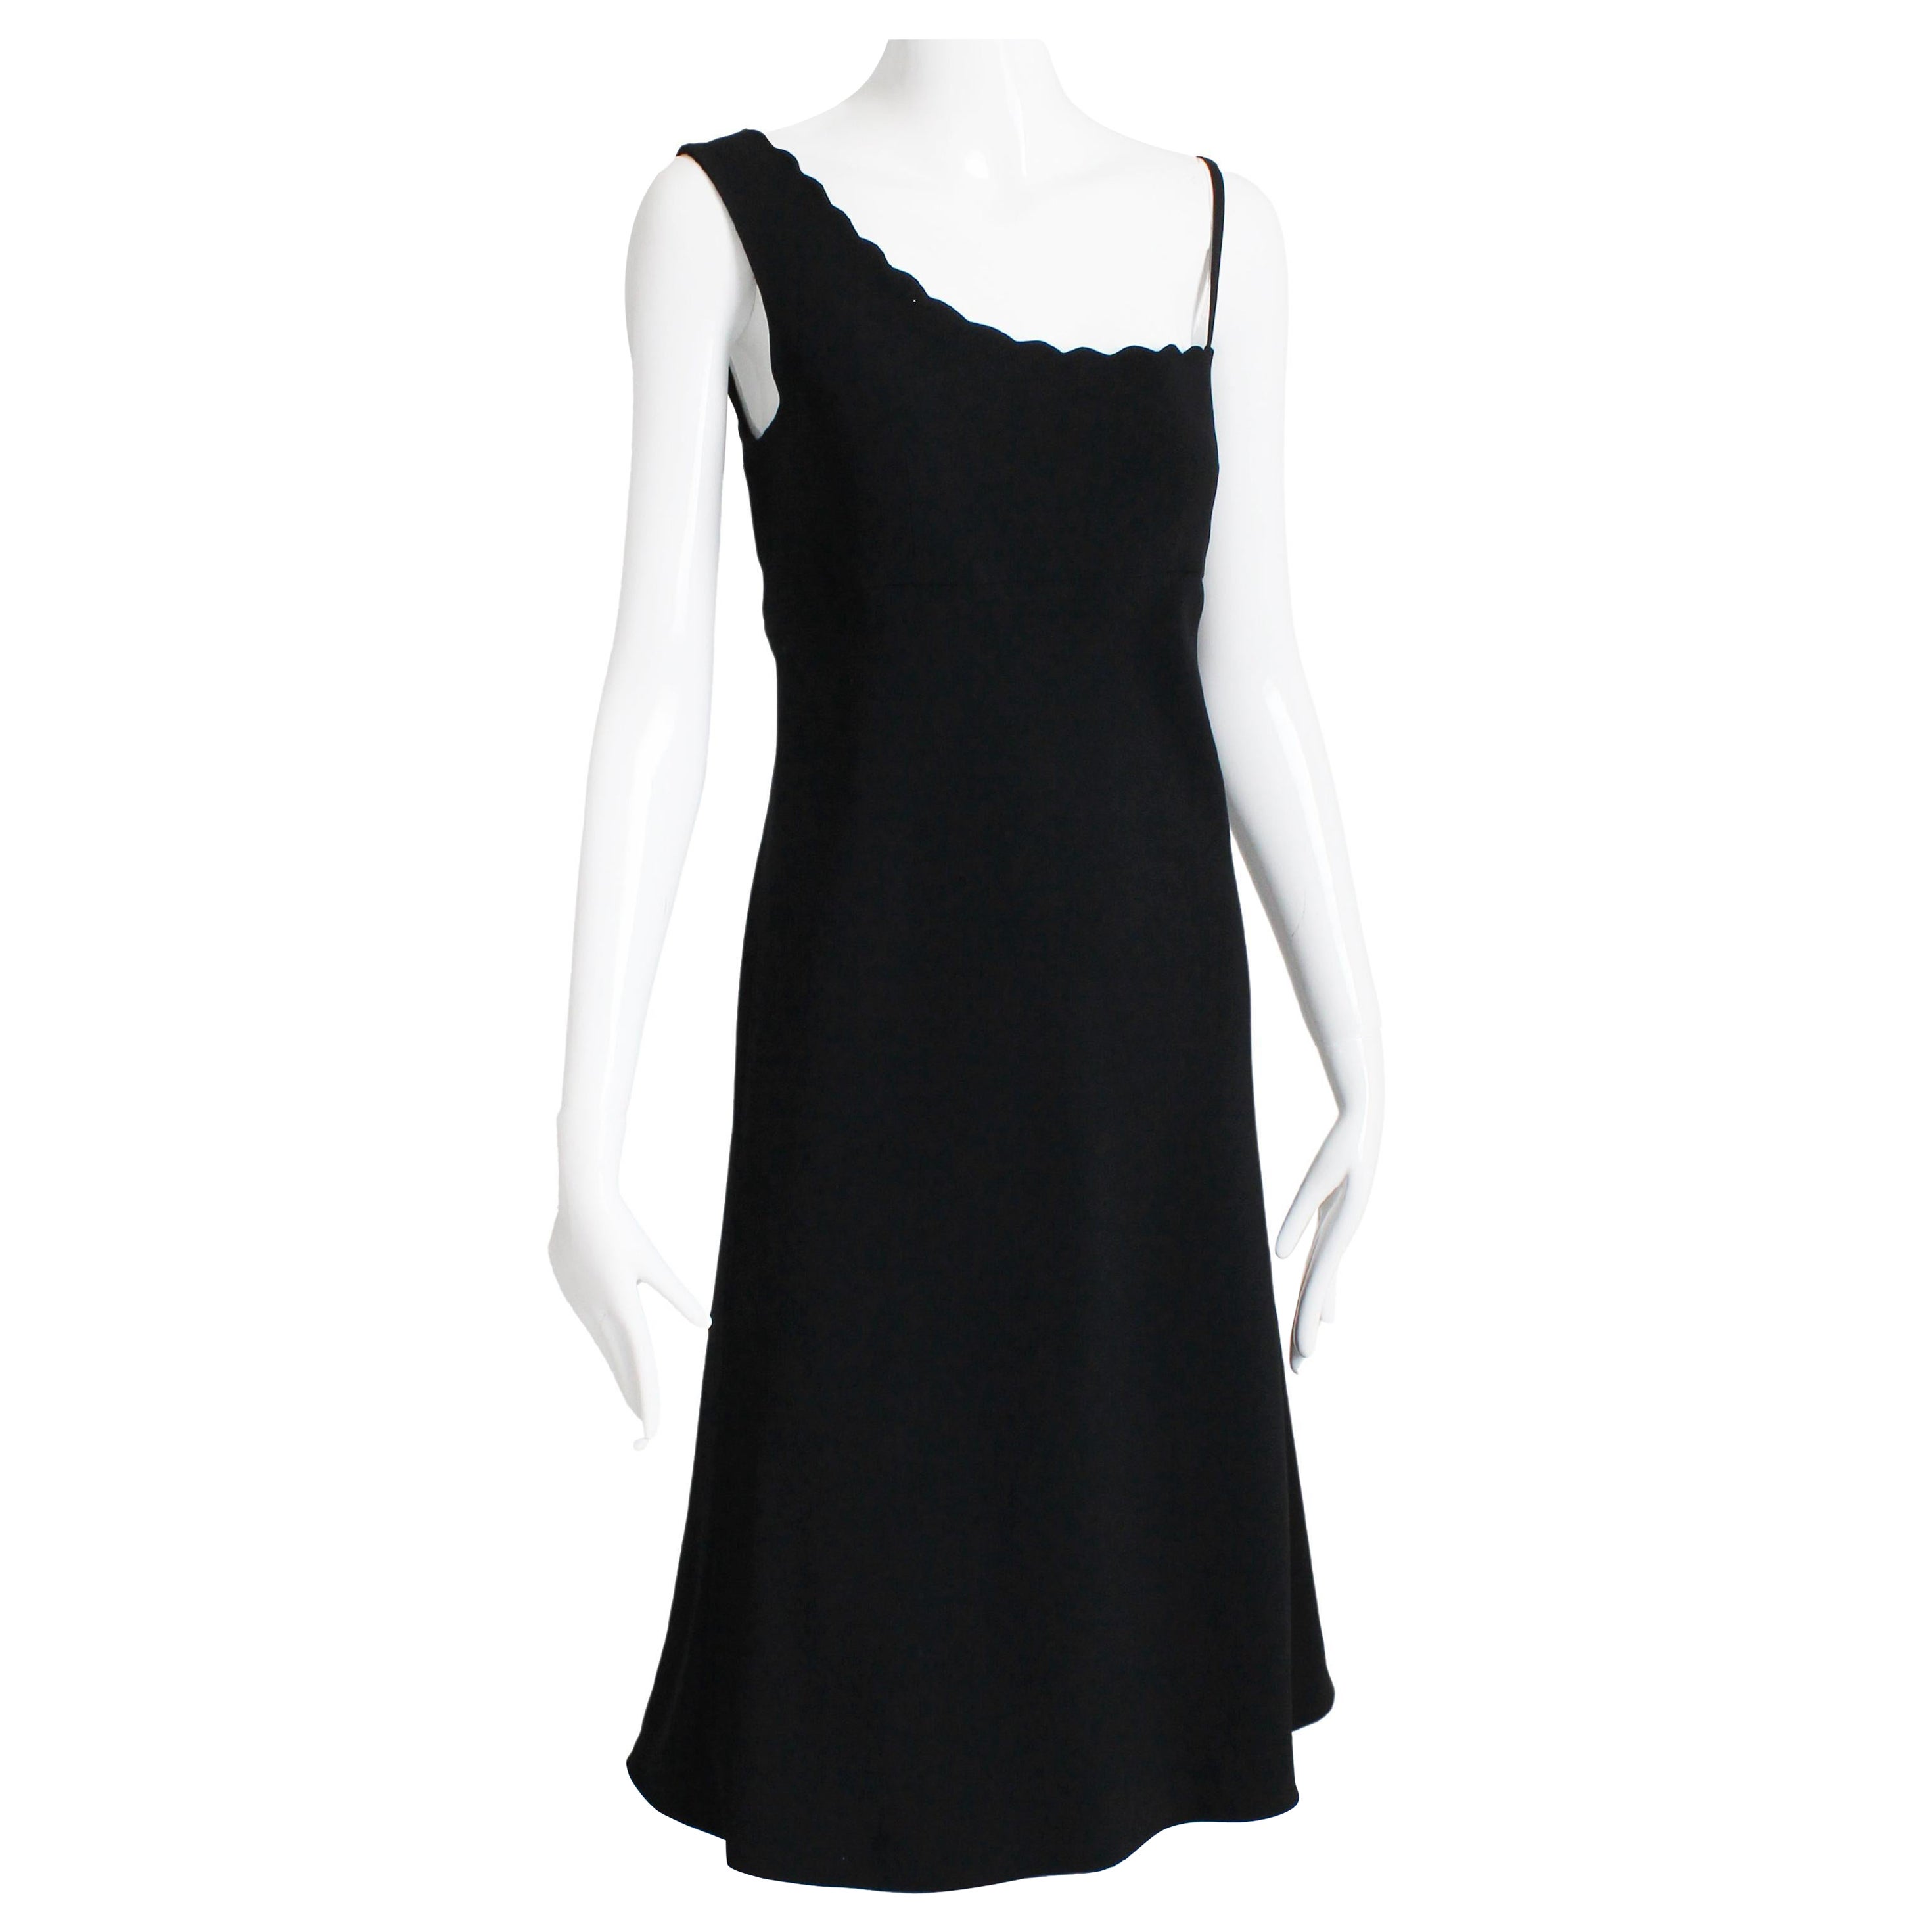 Sonia Rykiel Dress One Shoulder Scallop Collar Little Black Dress Vintage 90s 